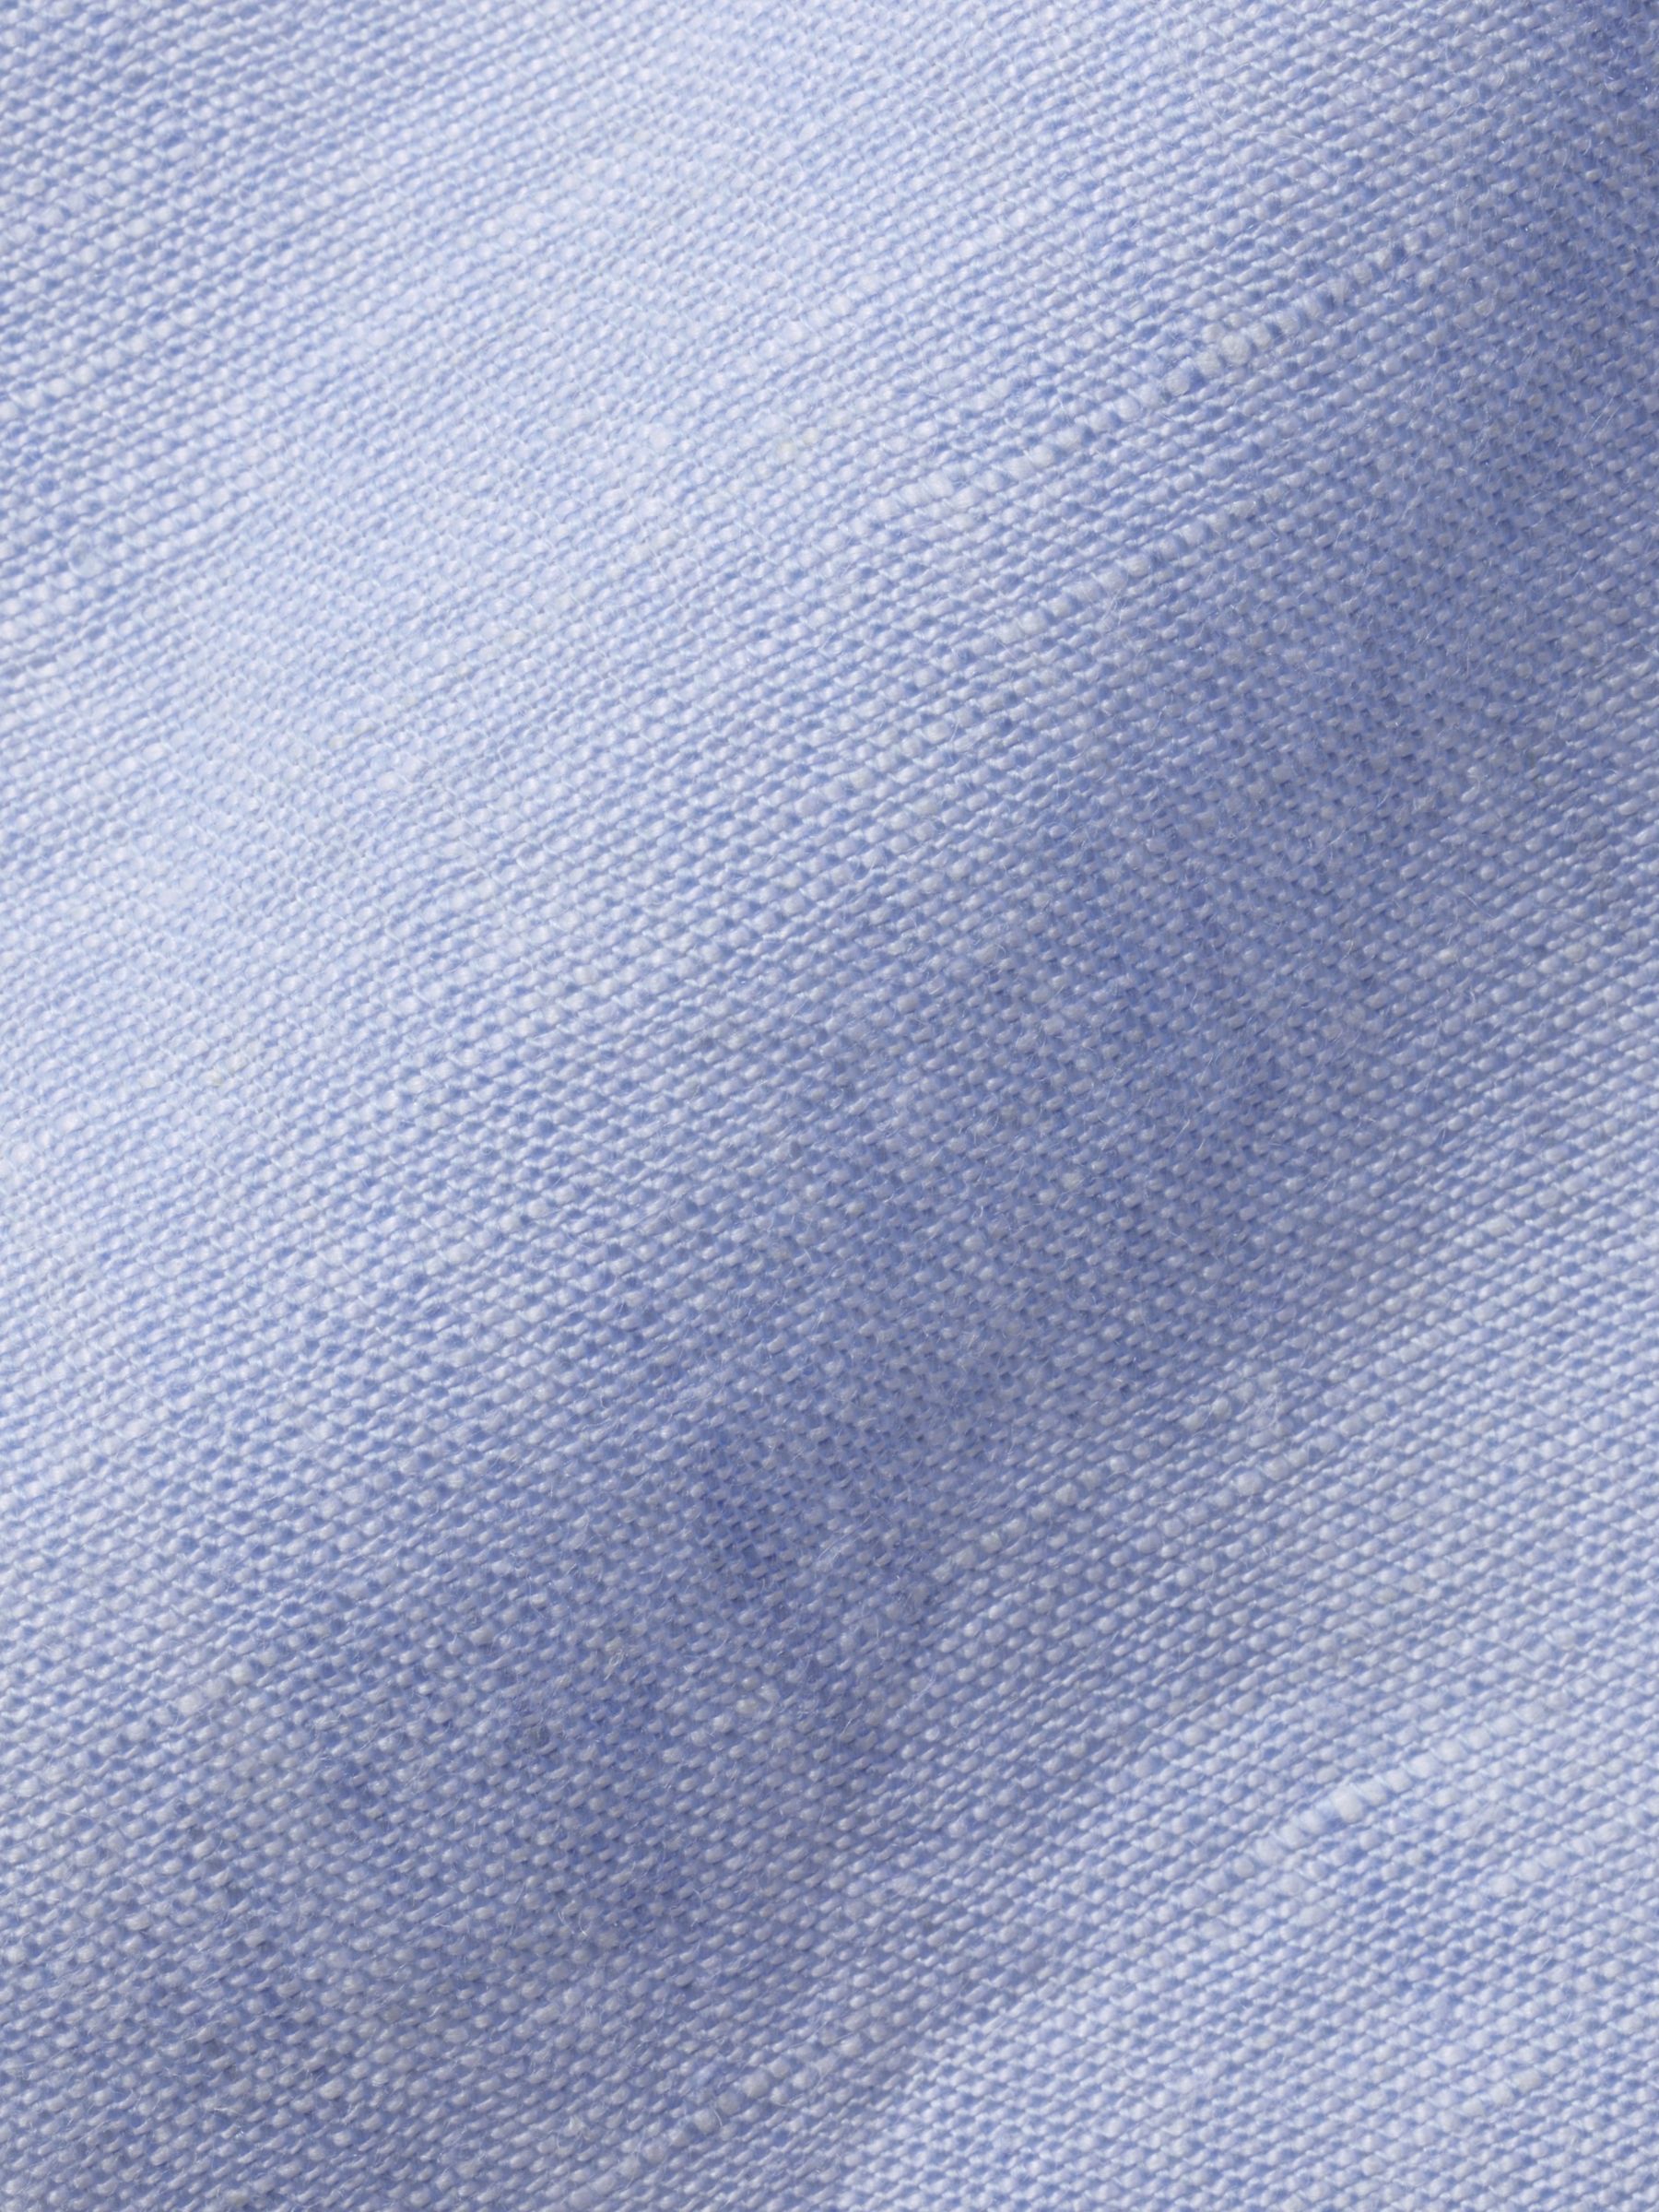 Buy Charles Tyrwhitt Slim Fit Pure Linen Shirt Online at johnlewis.com